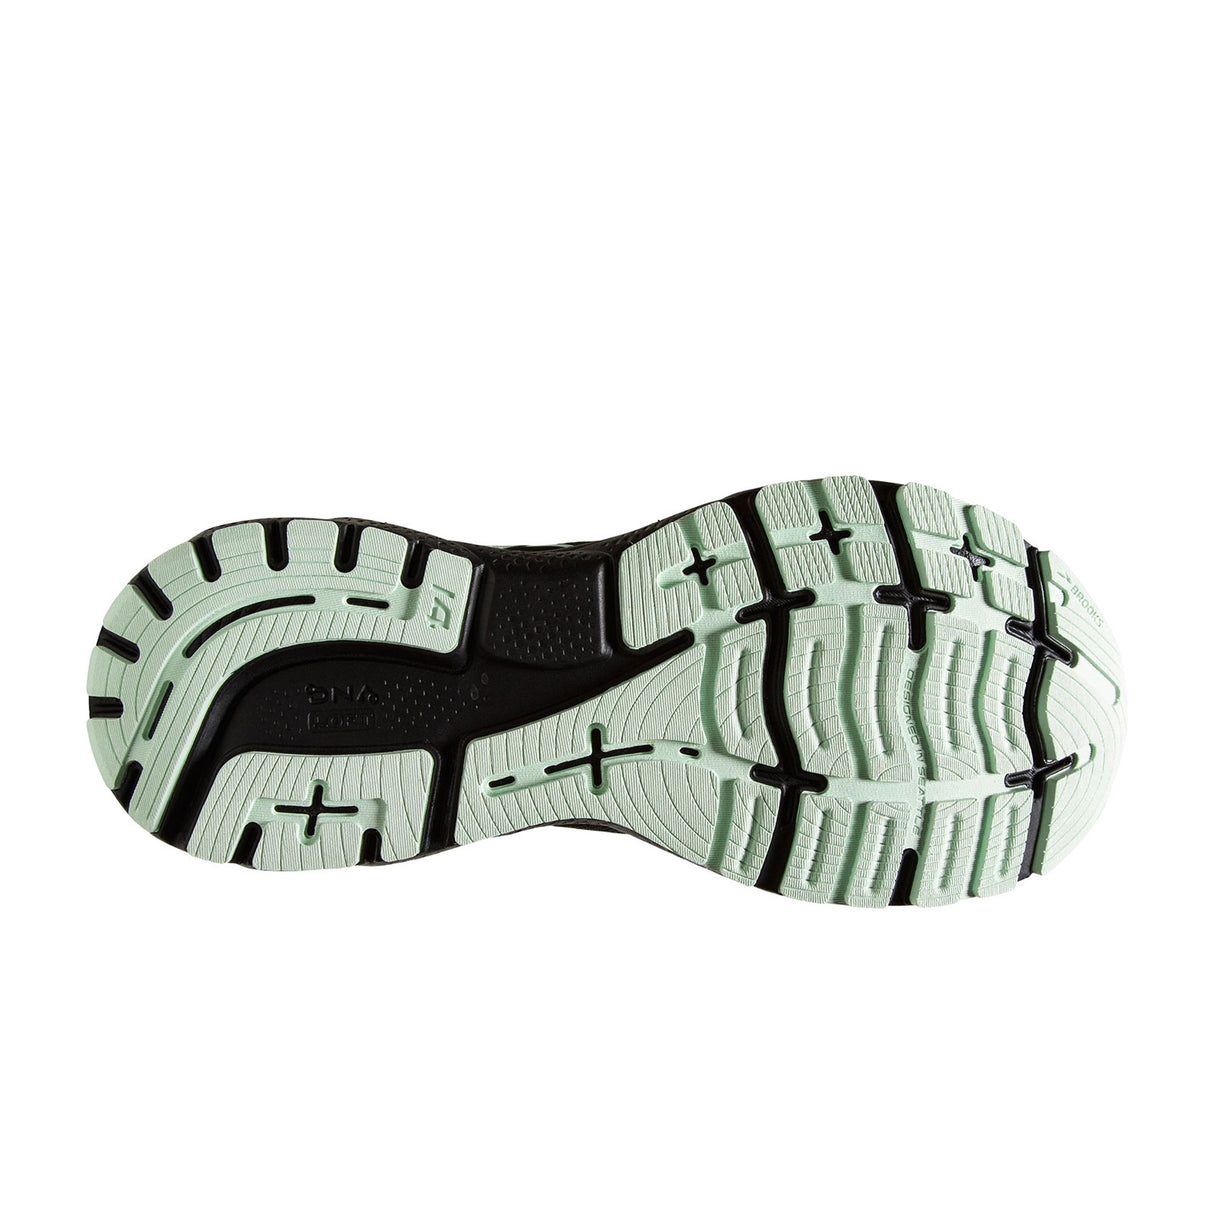 Brooks Ghost 14 GTX (Women) - Black/Blackened Pearl/Aquaglass Athletic - Running - Neutral - The Heel Shoe Fitters